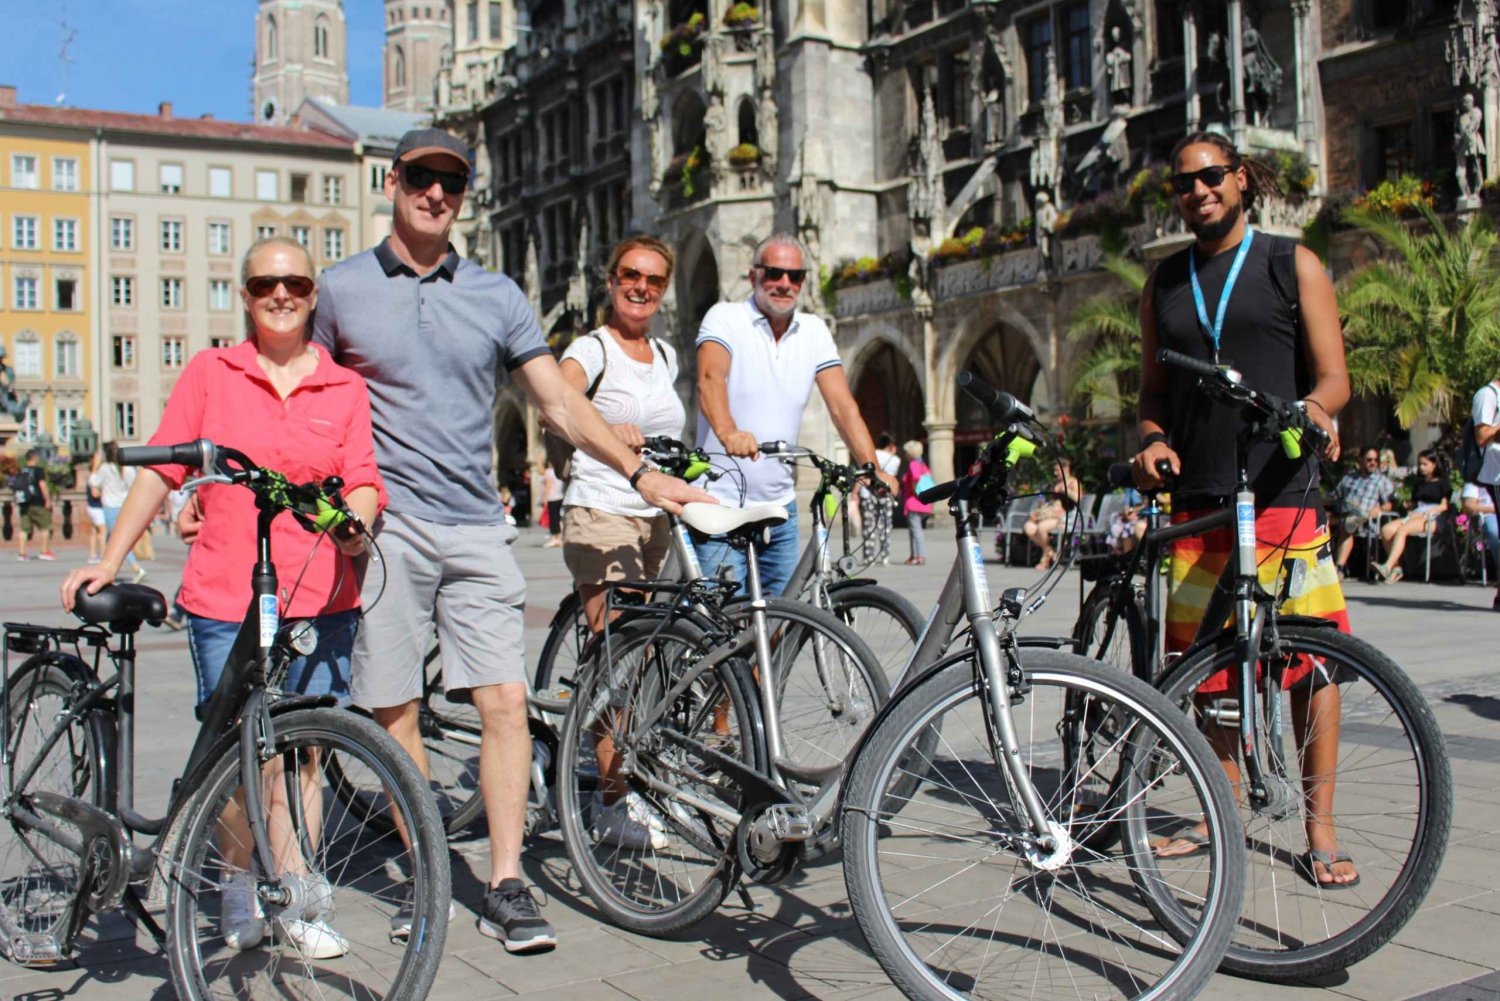 München på sykkel: Halvdagstur med lokal guide